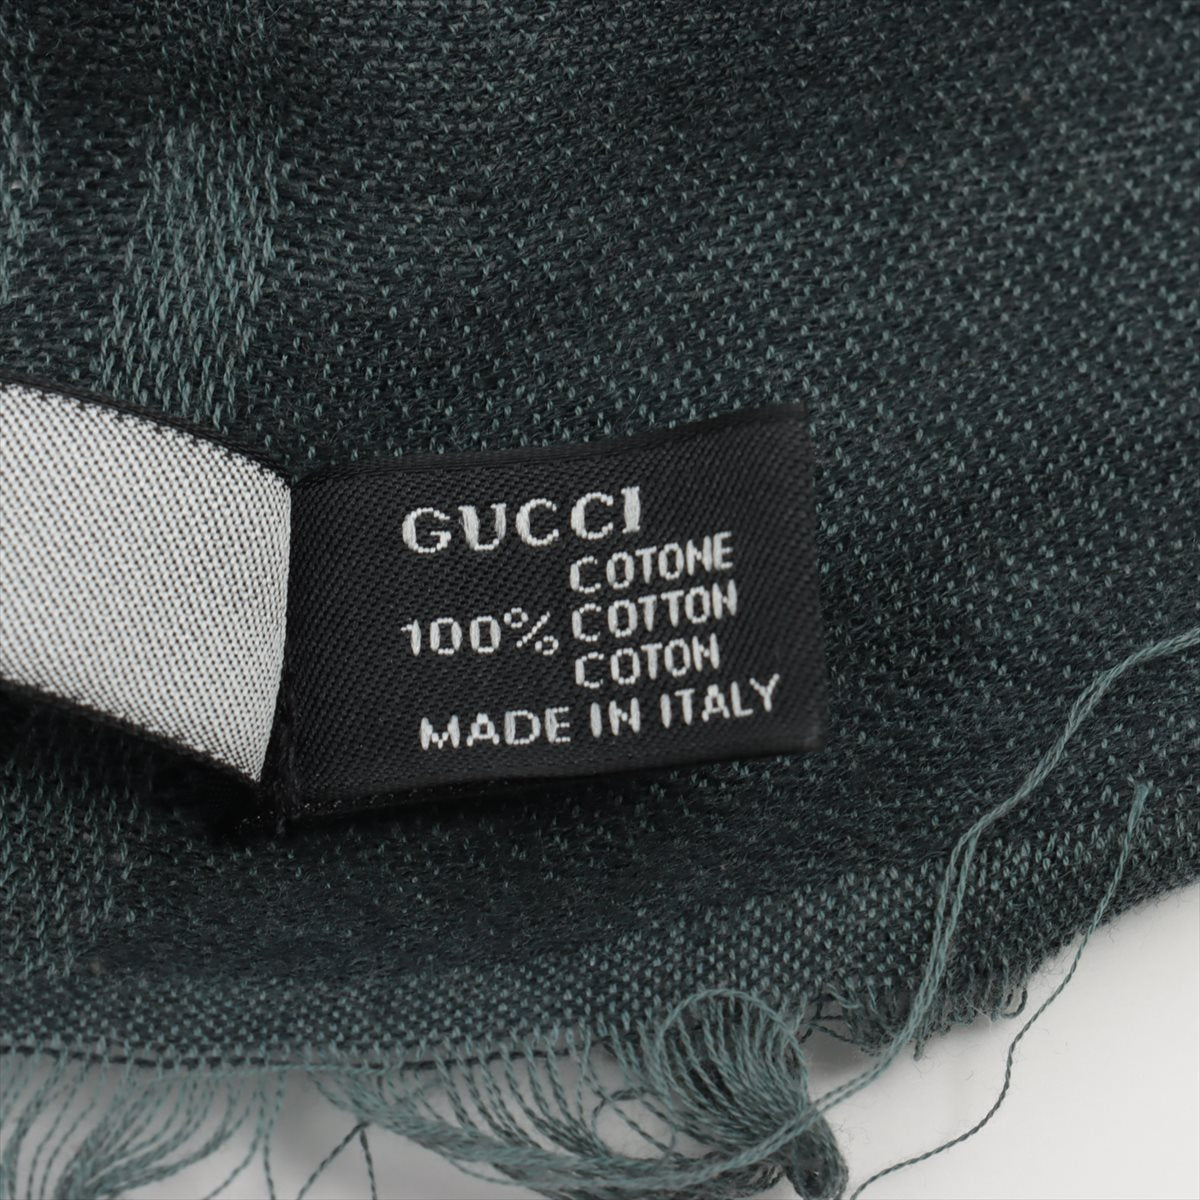 Gucci GG pattern Stole Cotton Black x Gray